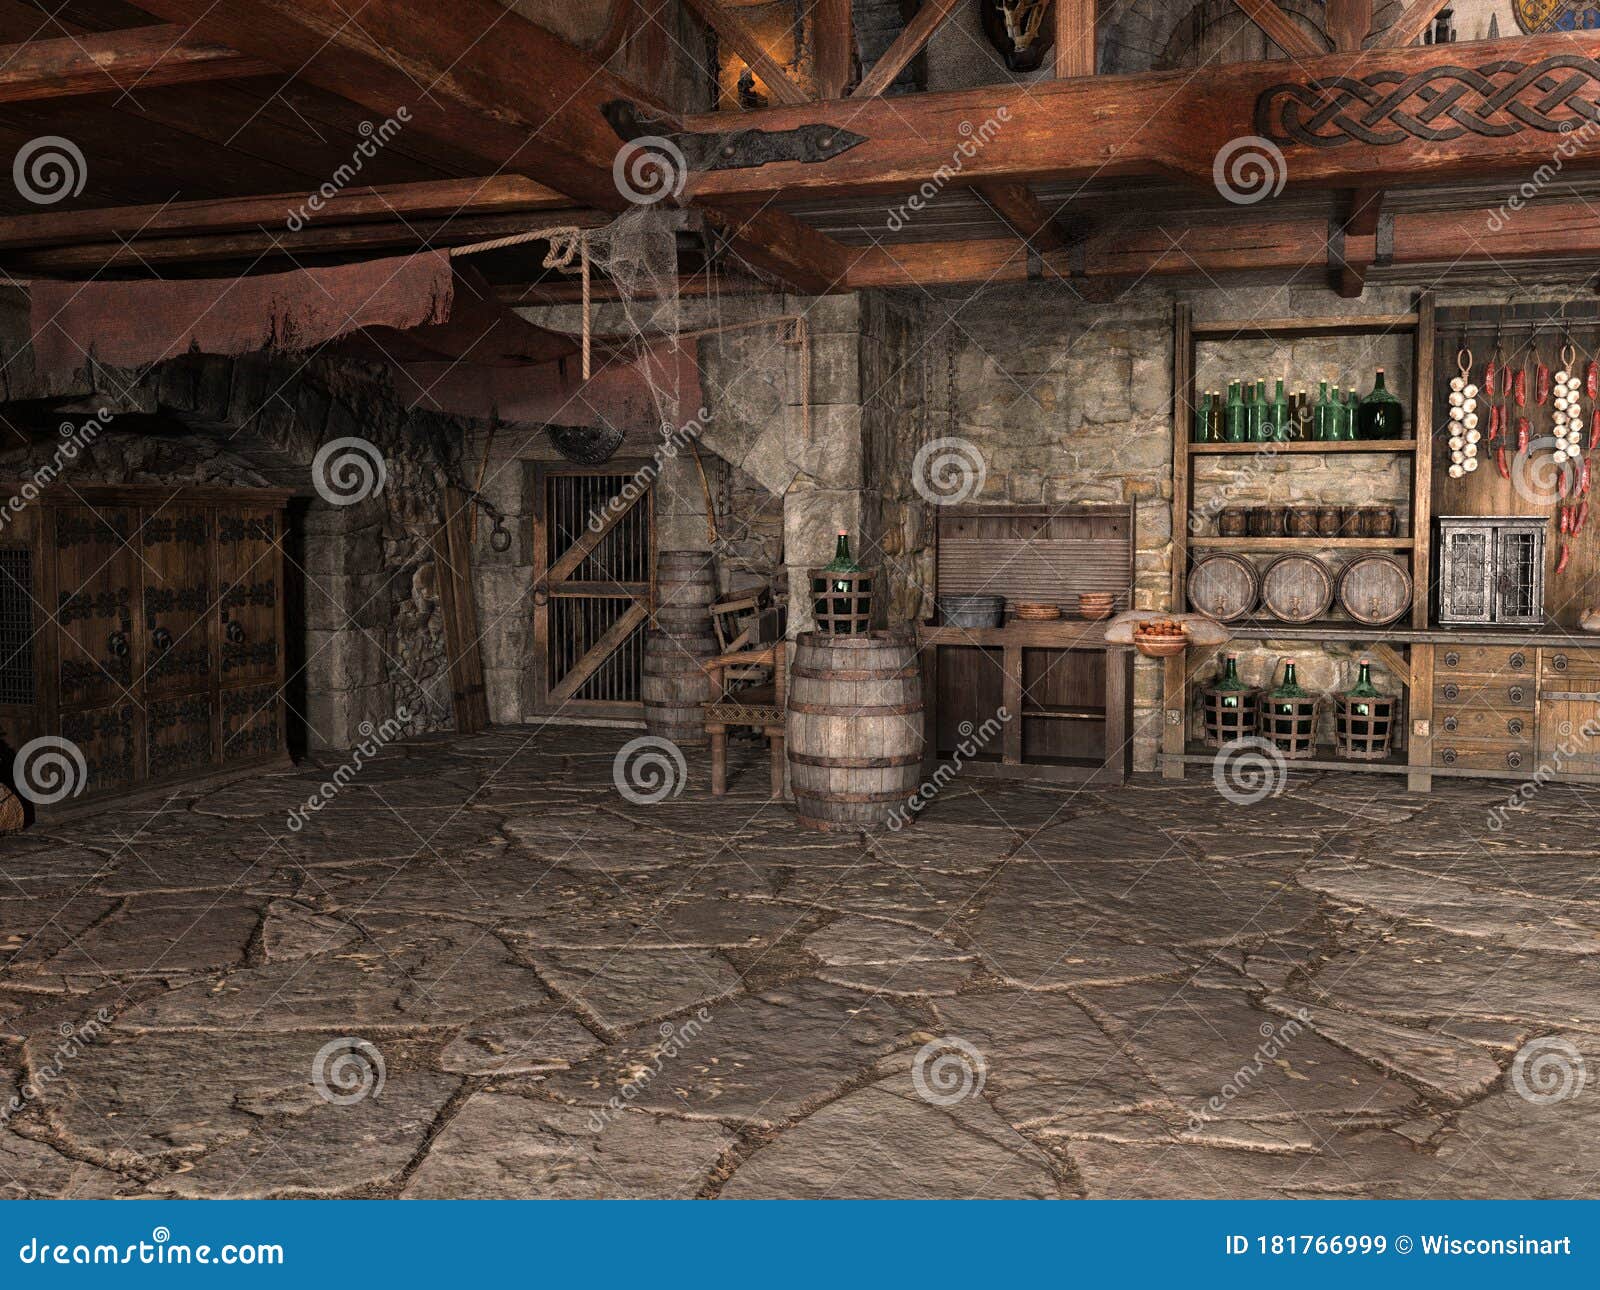 medieval inn, tavern, bar, background